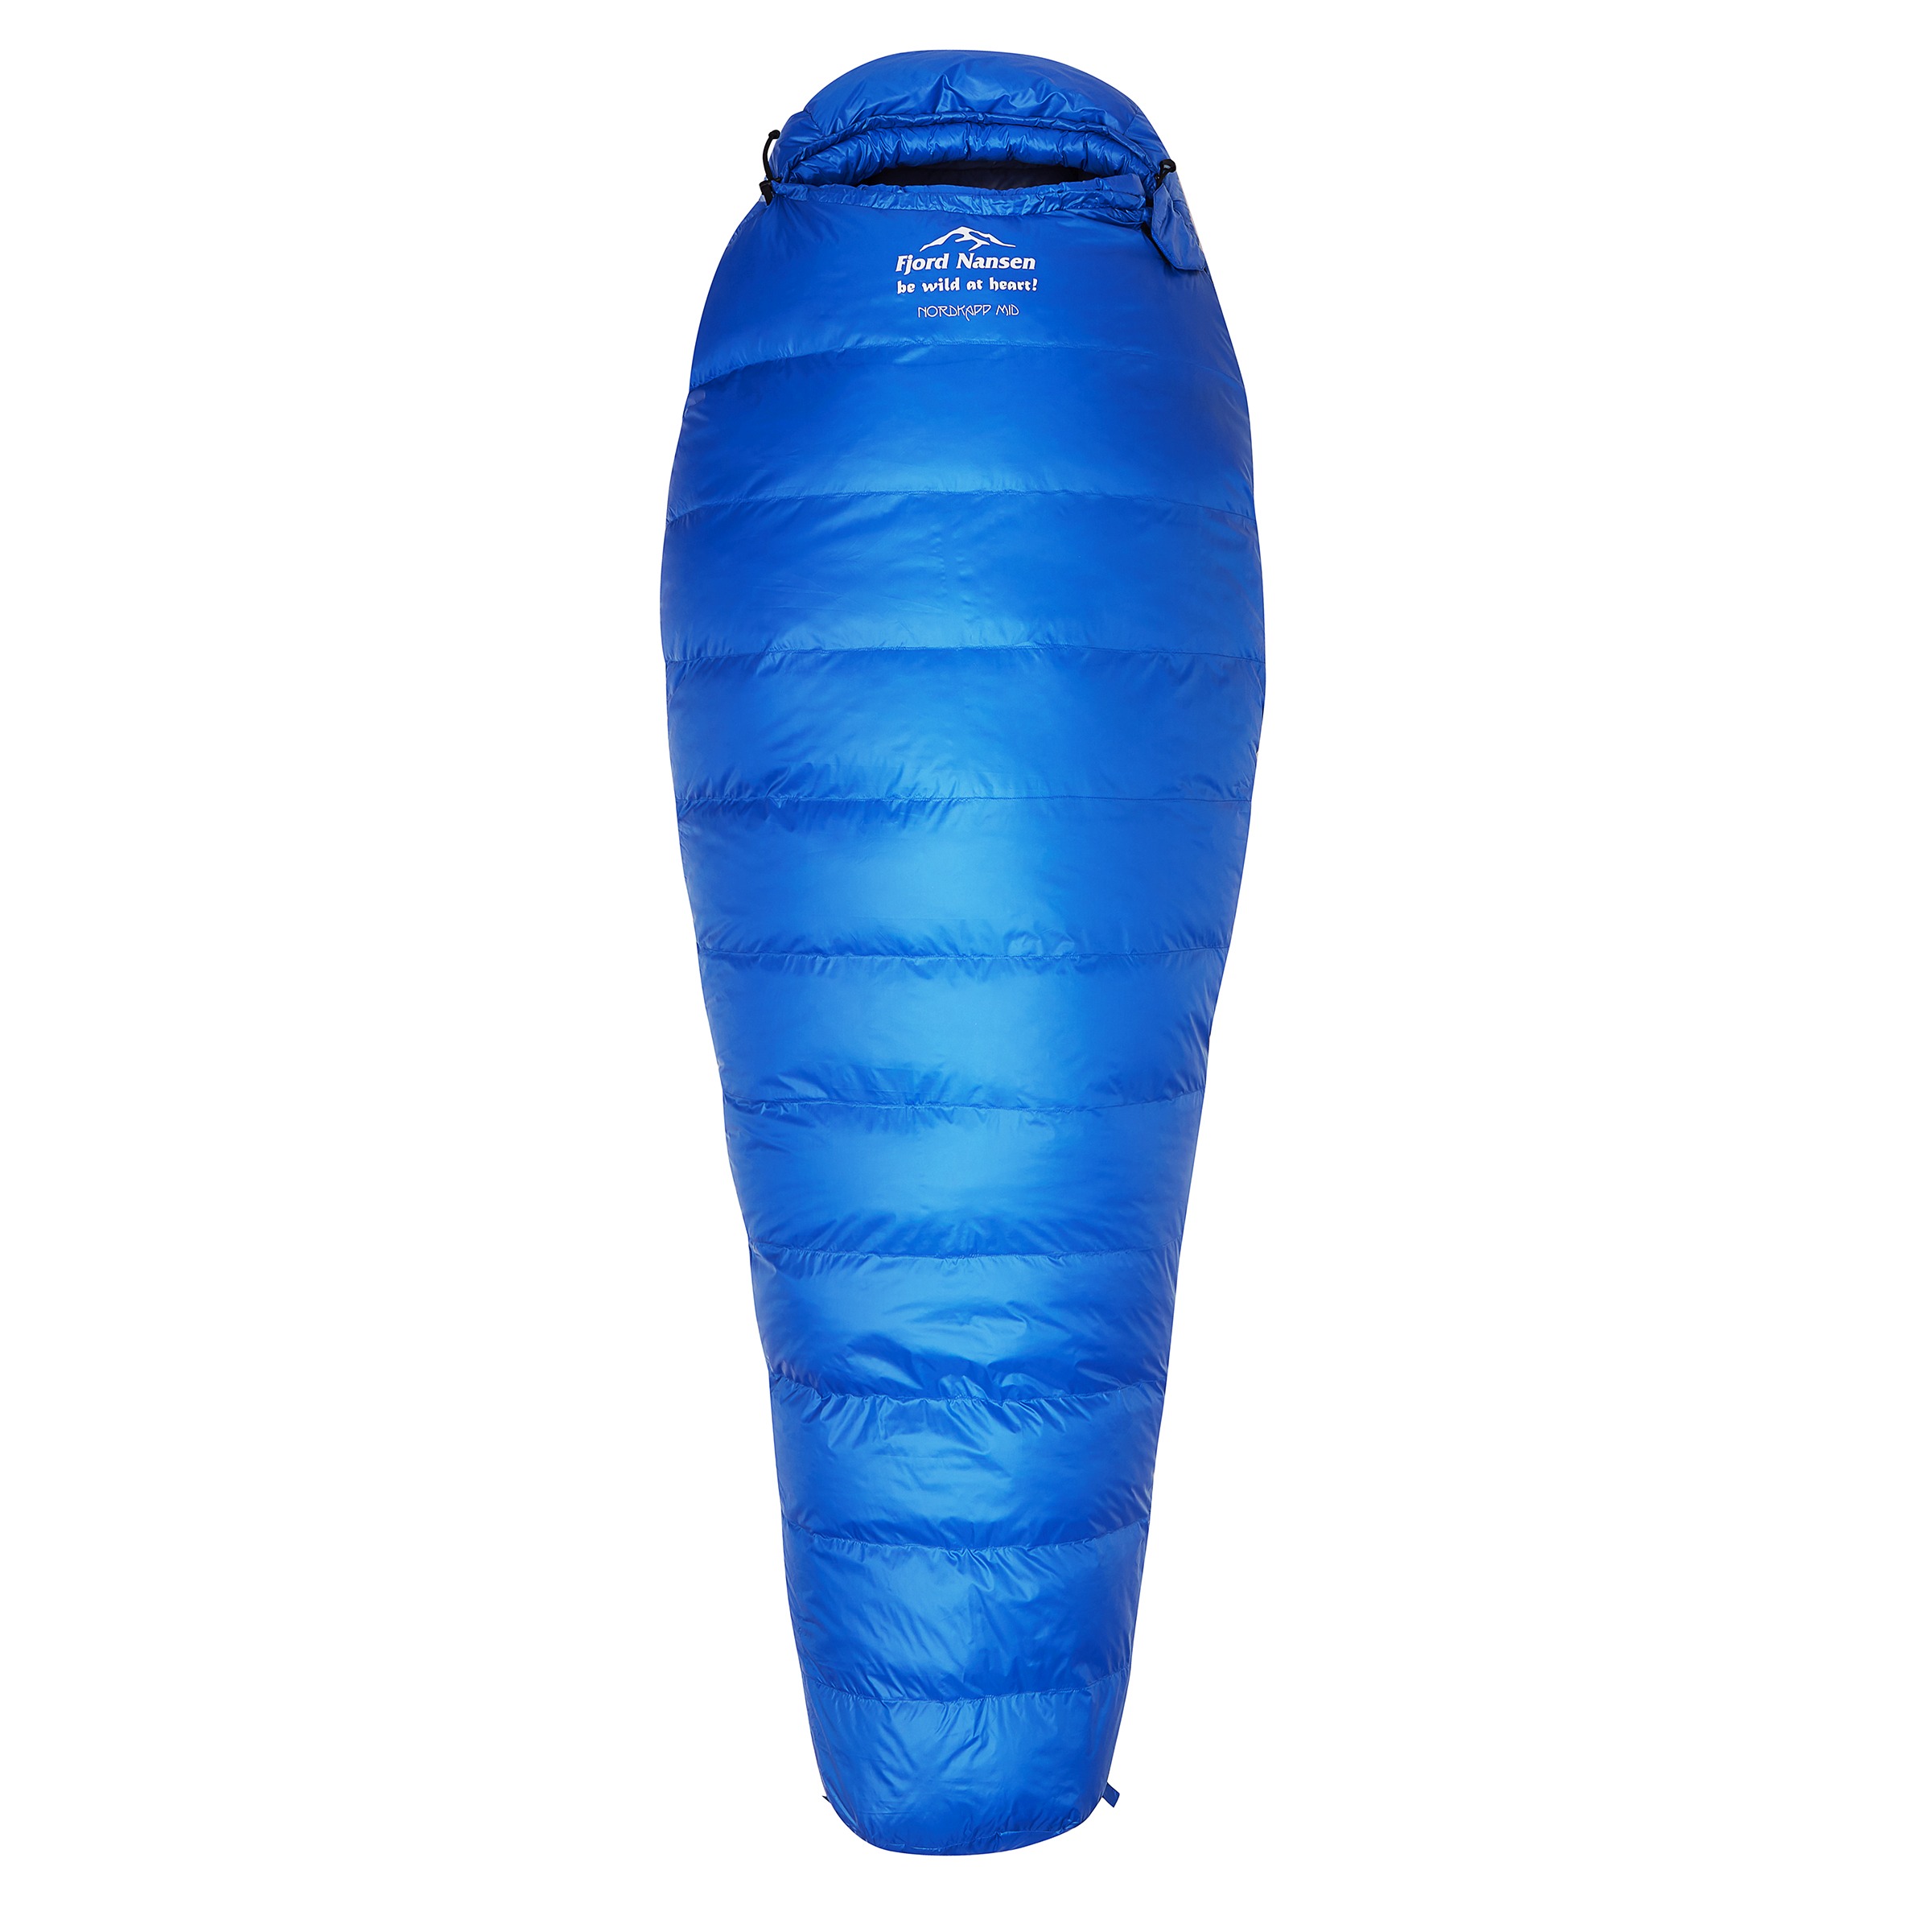 NORDKAPP 500 MID LEFT -5°C down sleeping bag